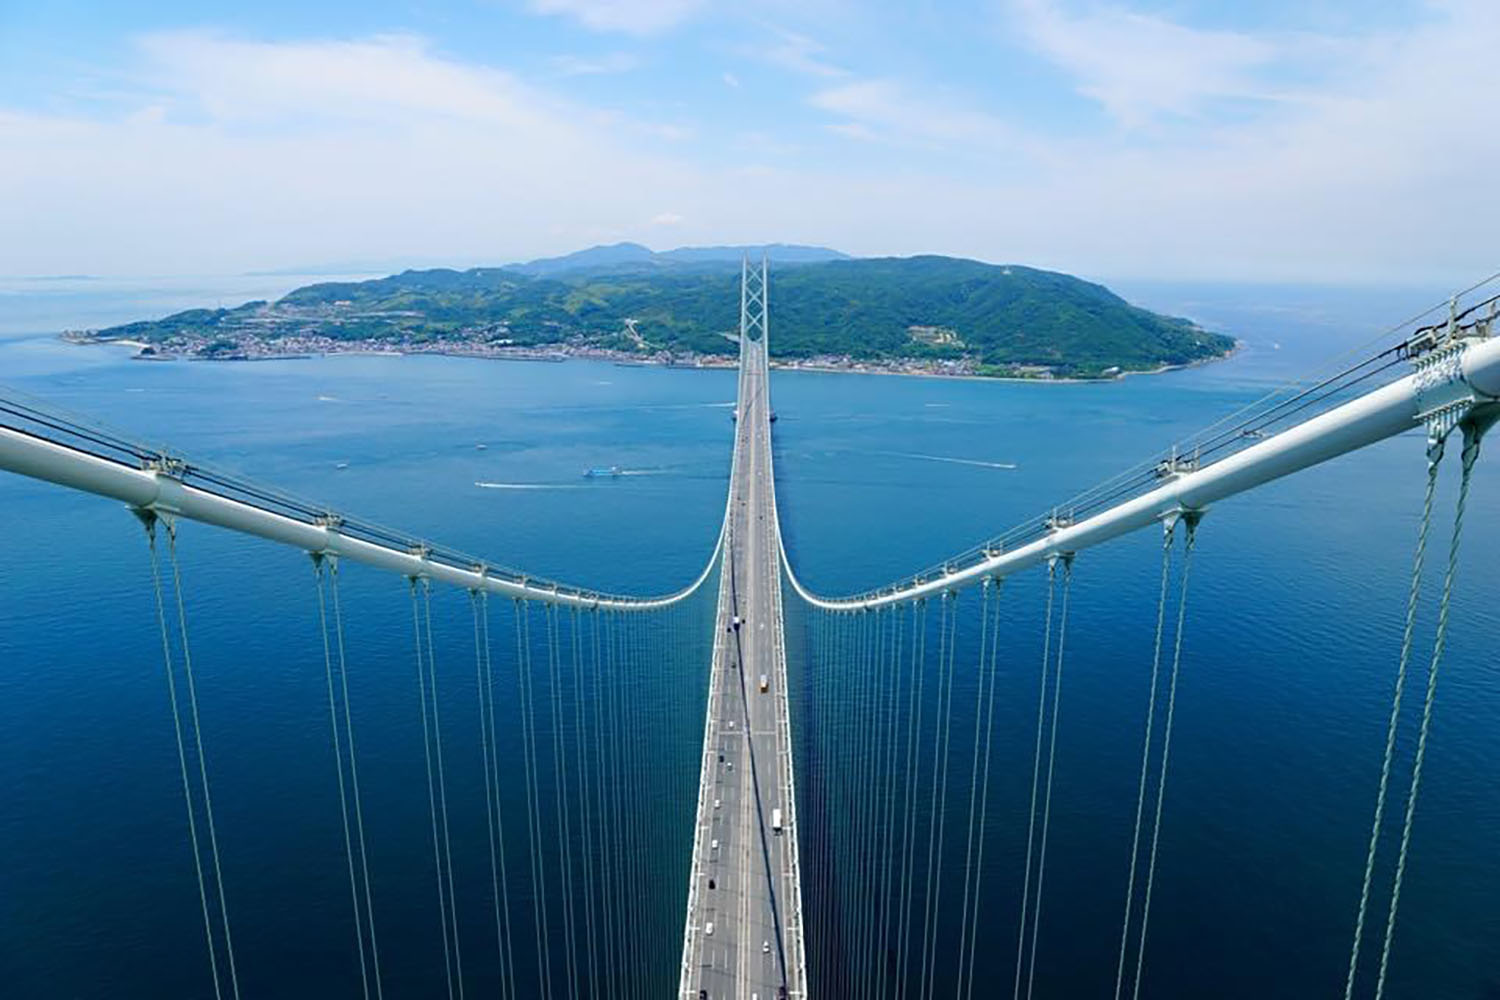 兵庫県神戸市と淡路市を結ぶ明石海峡大橋 〜 画像10